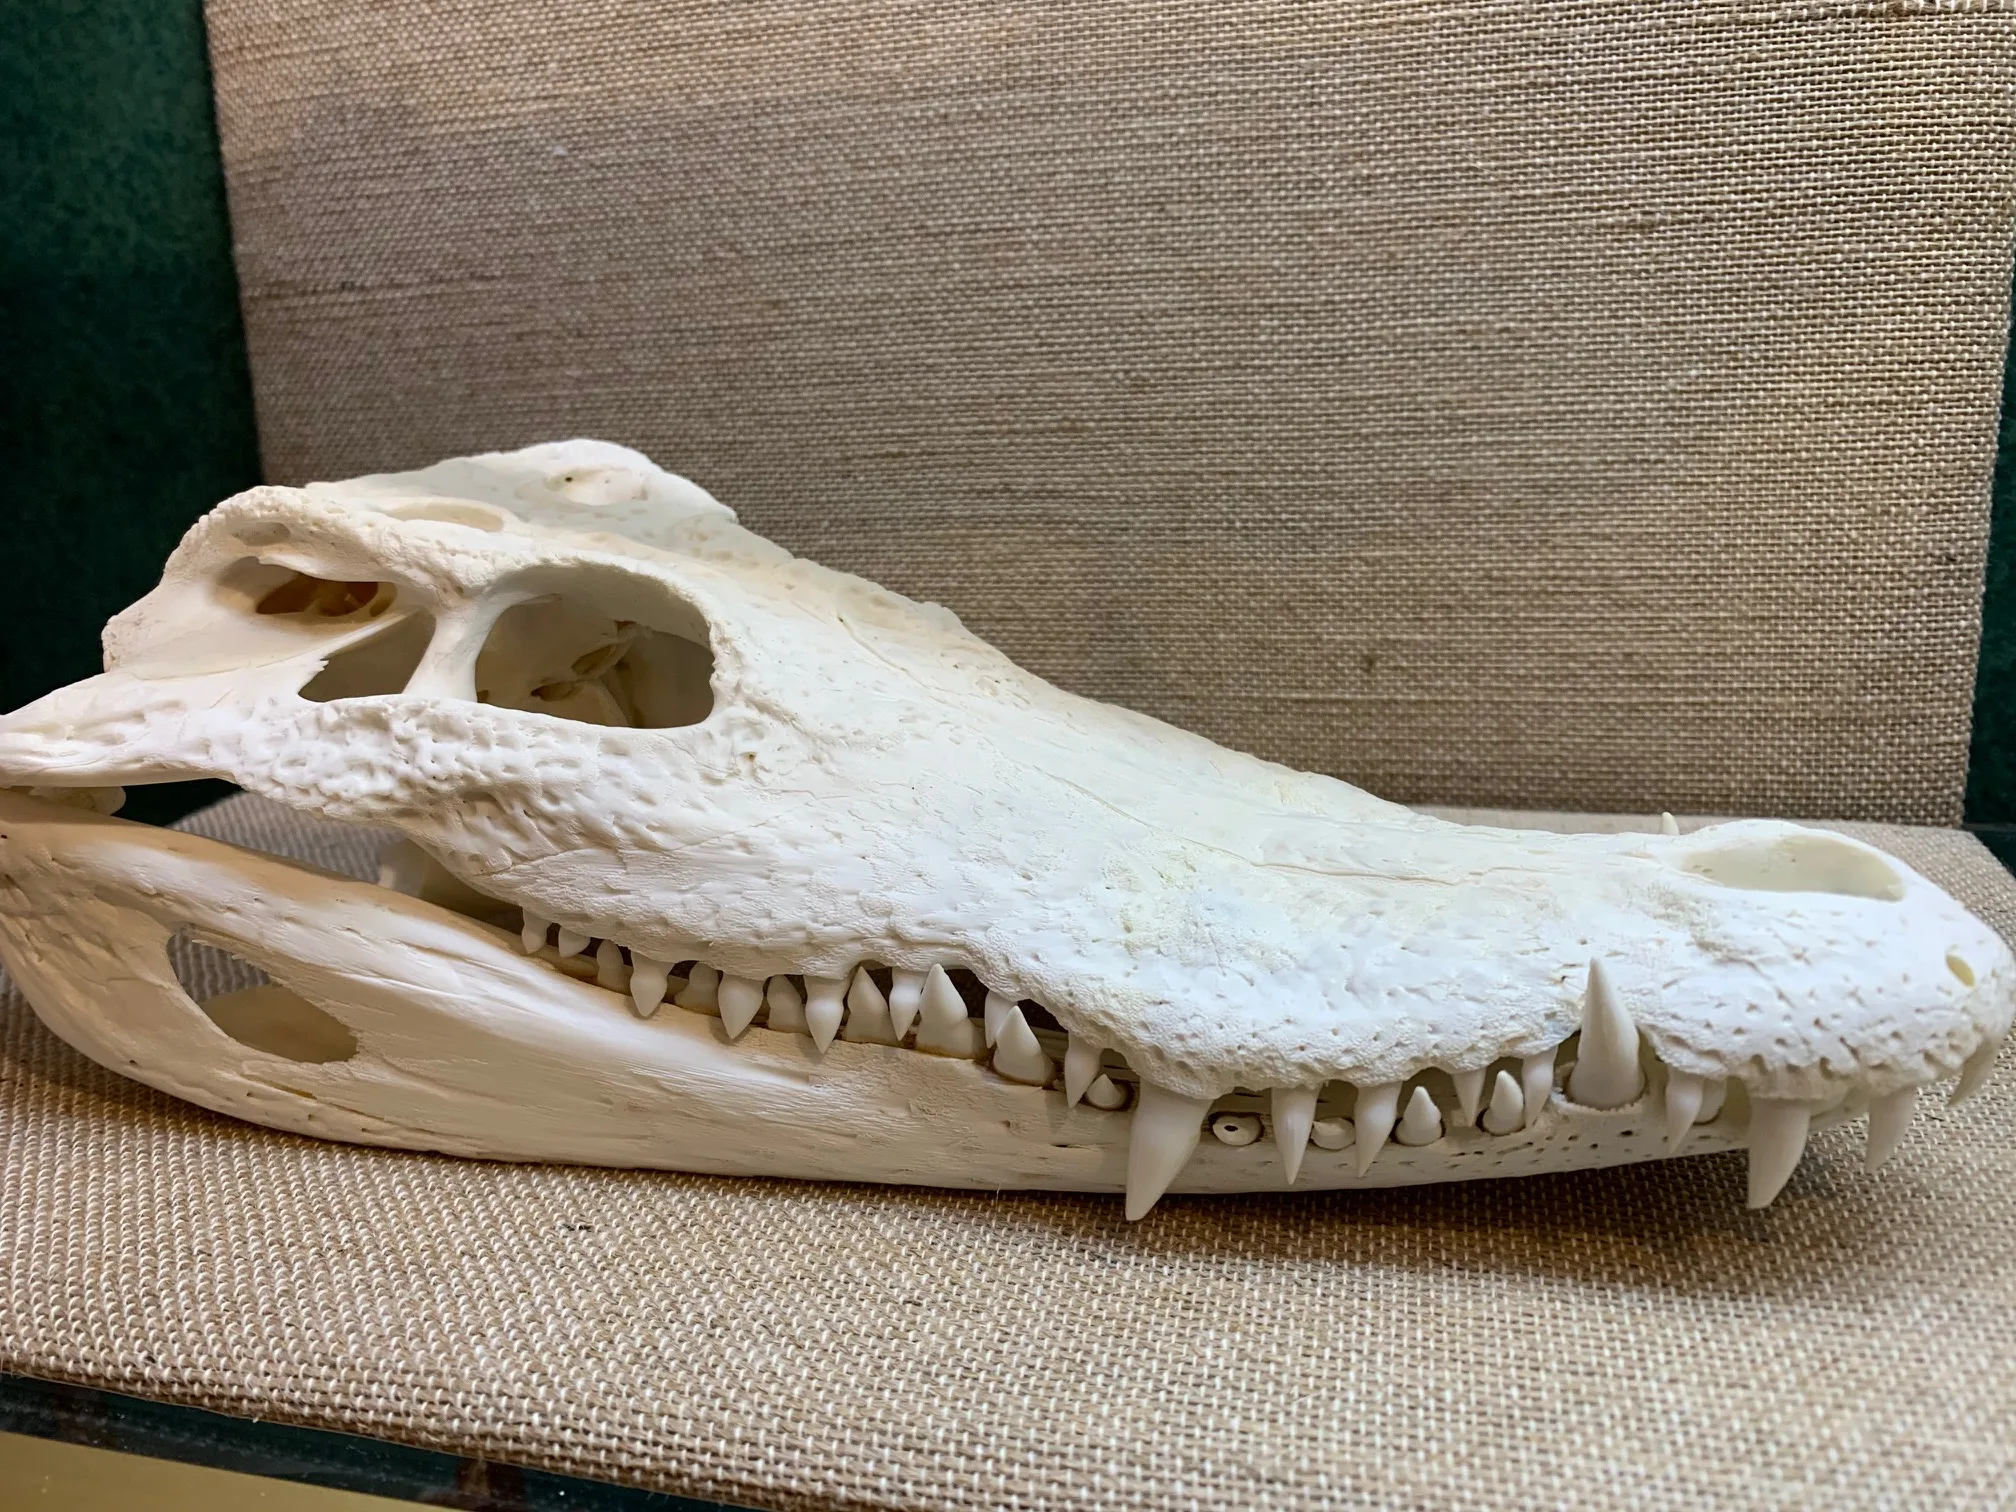 Crocodile Skull, Large Size Prehistoric Online